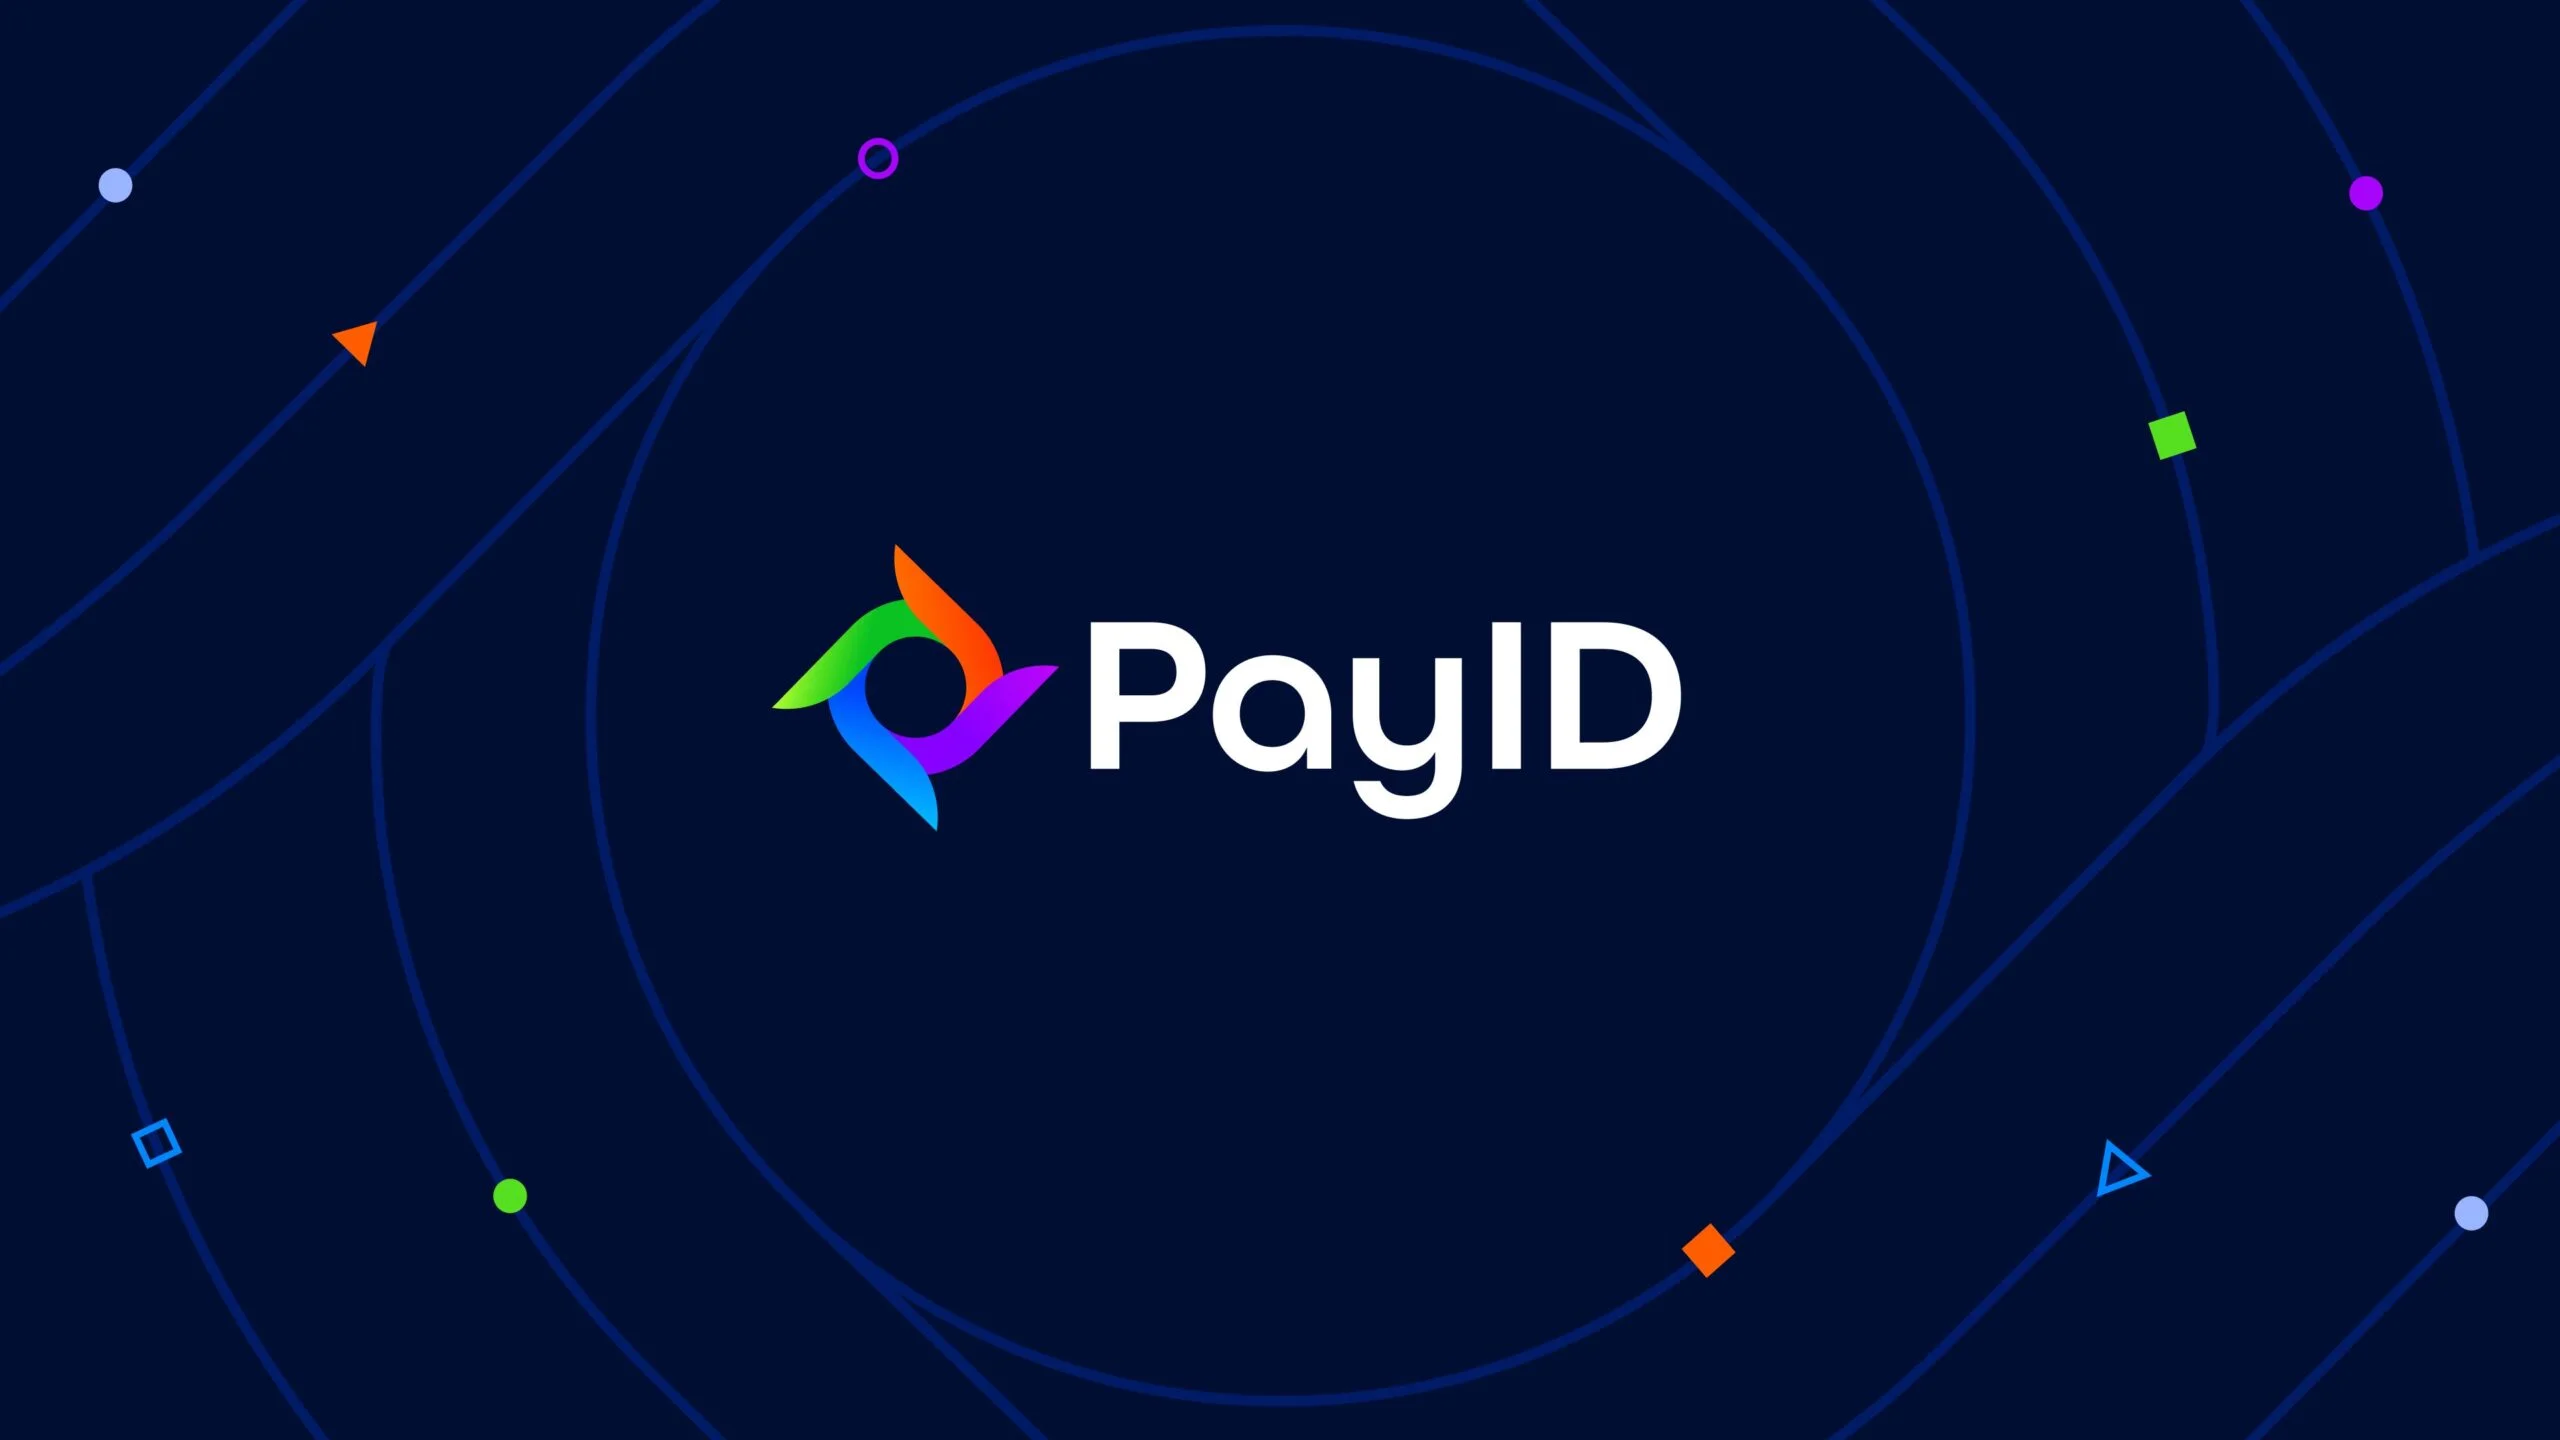 pay id logo change